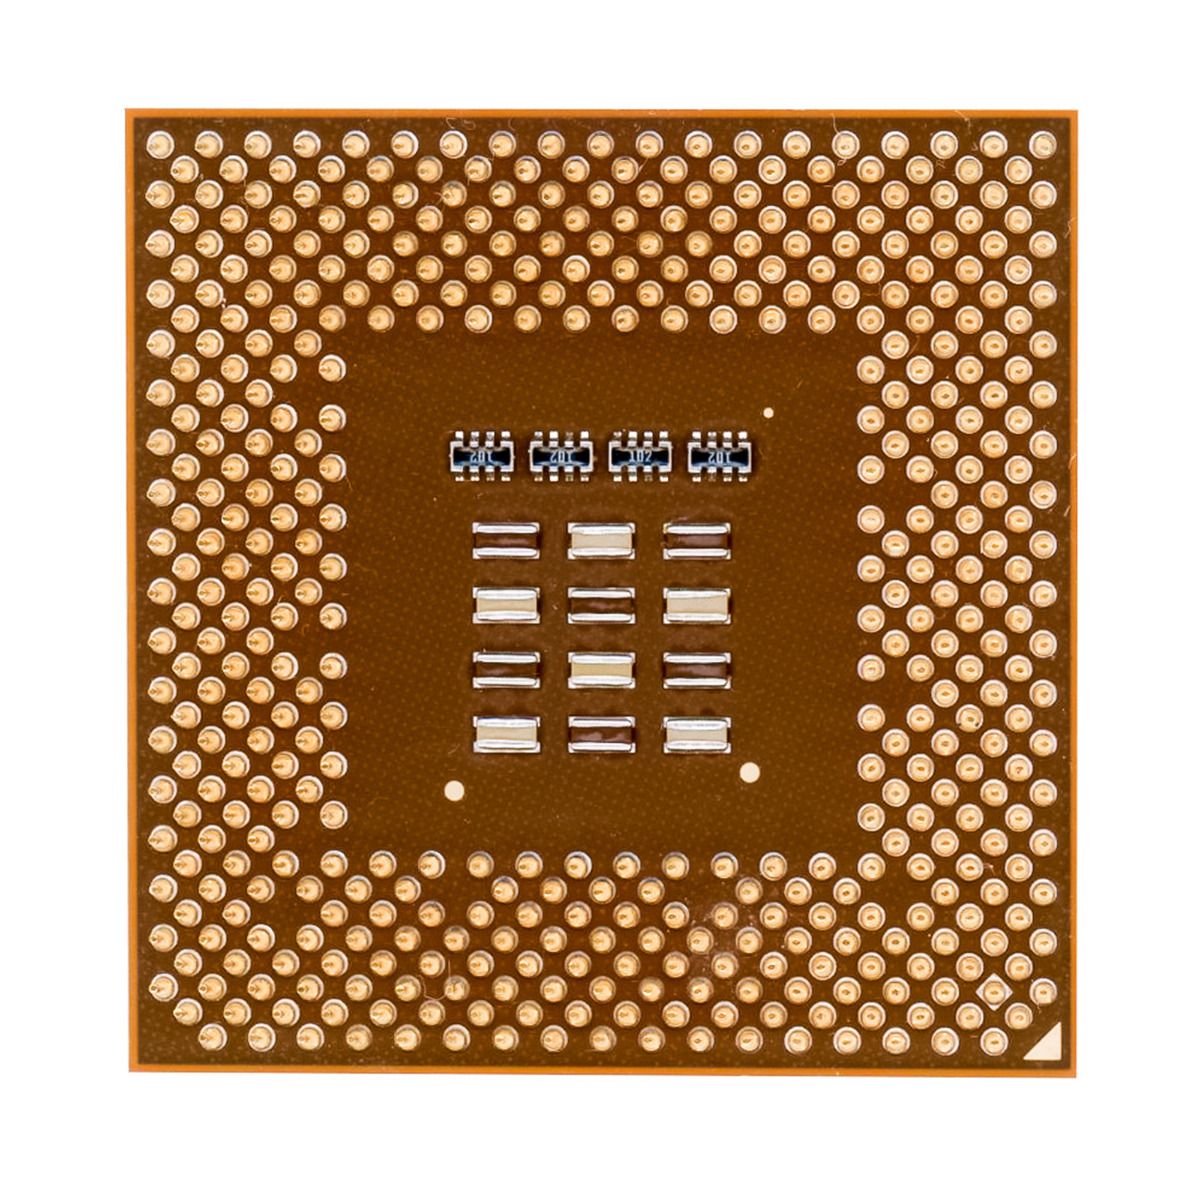 AMD ATHLON XP 1700+ AX1700DMT3C 1467 MHz PRISE 462